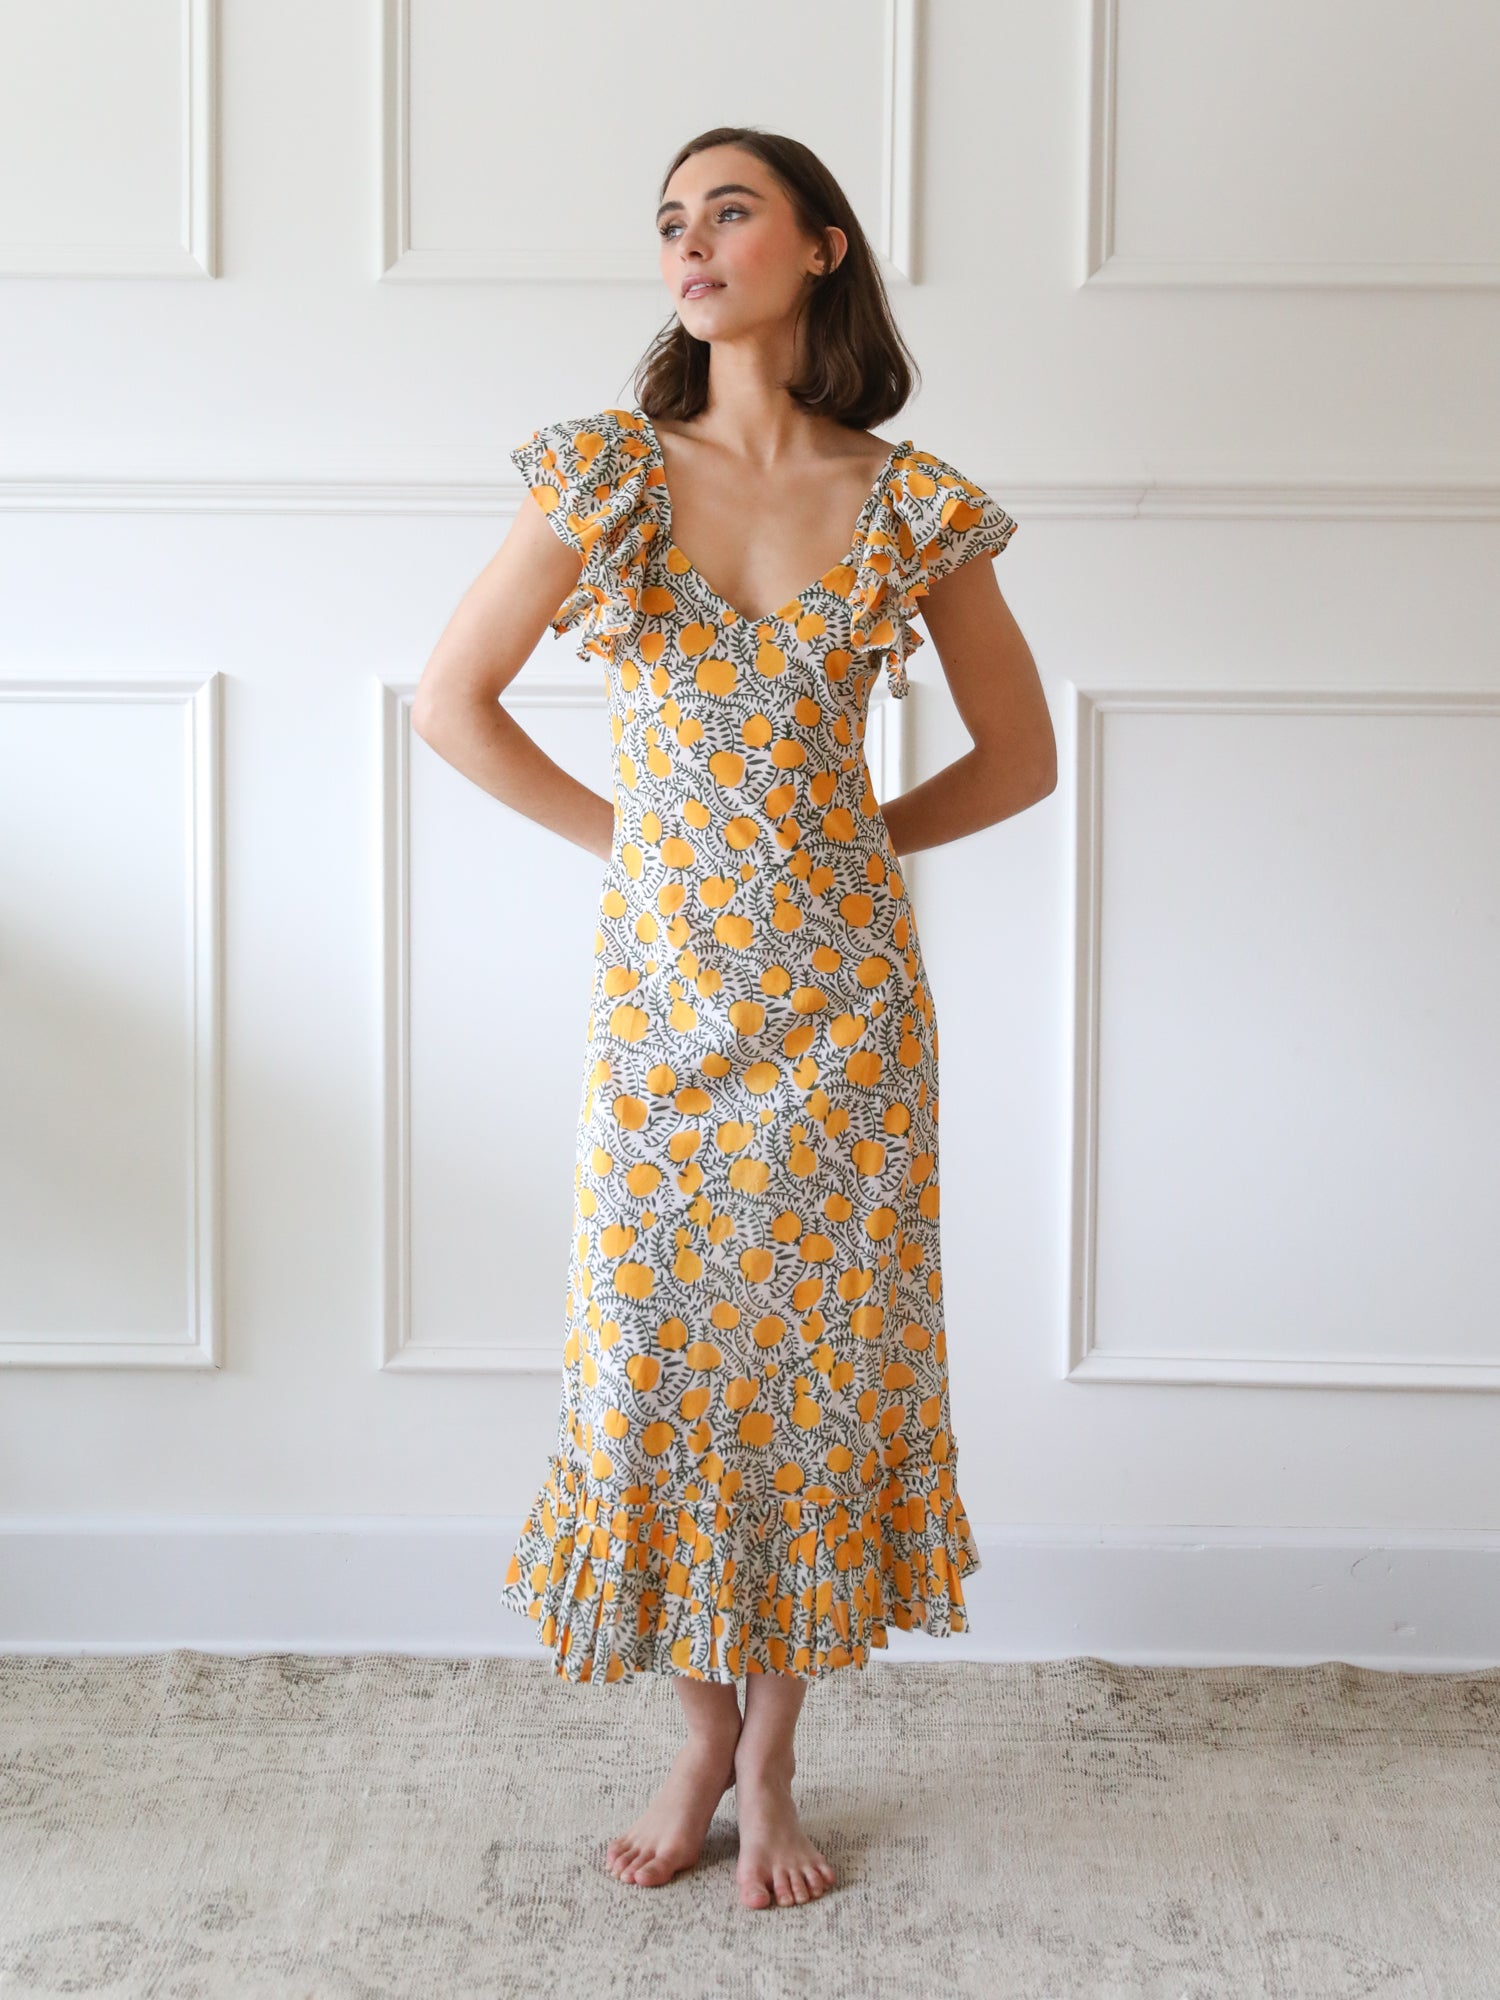 MILLE Clothing Klara Dress in Citrus